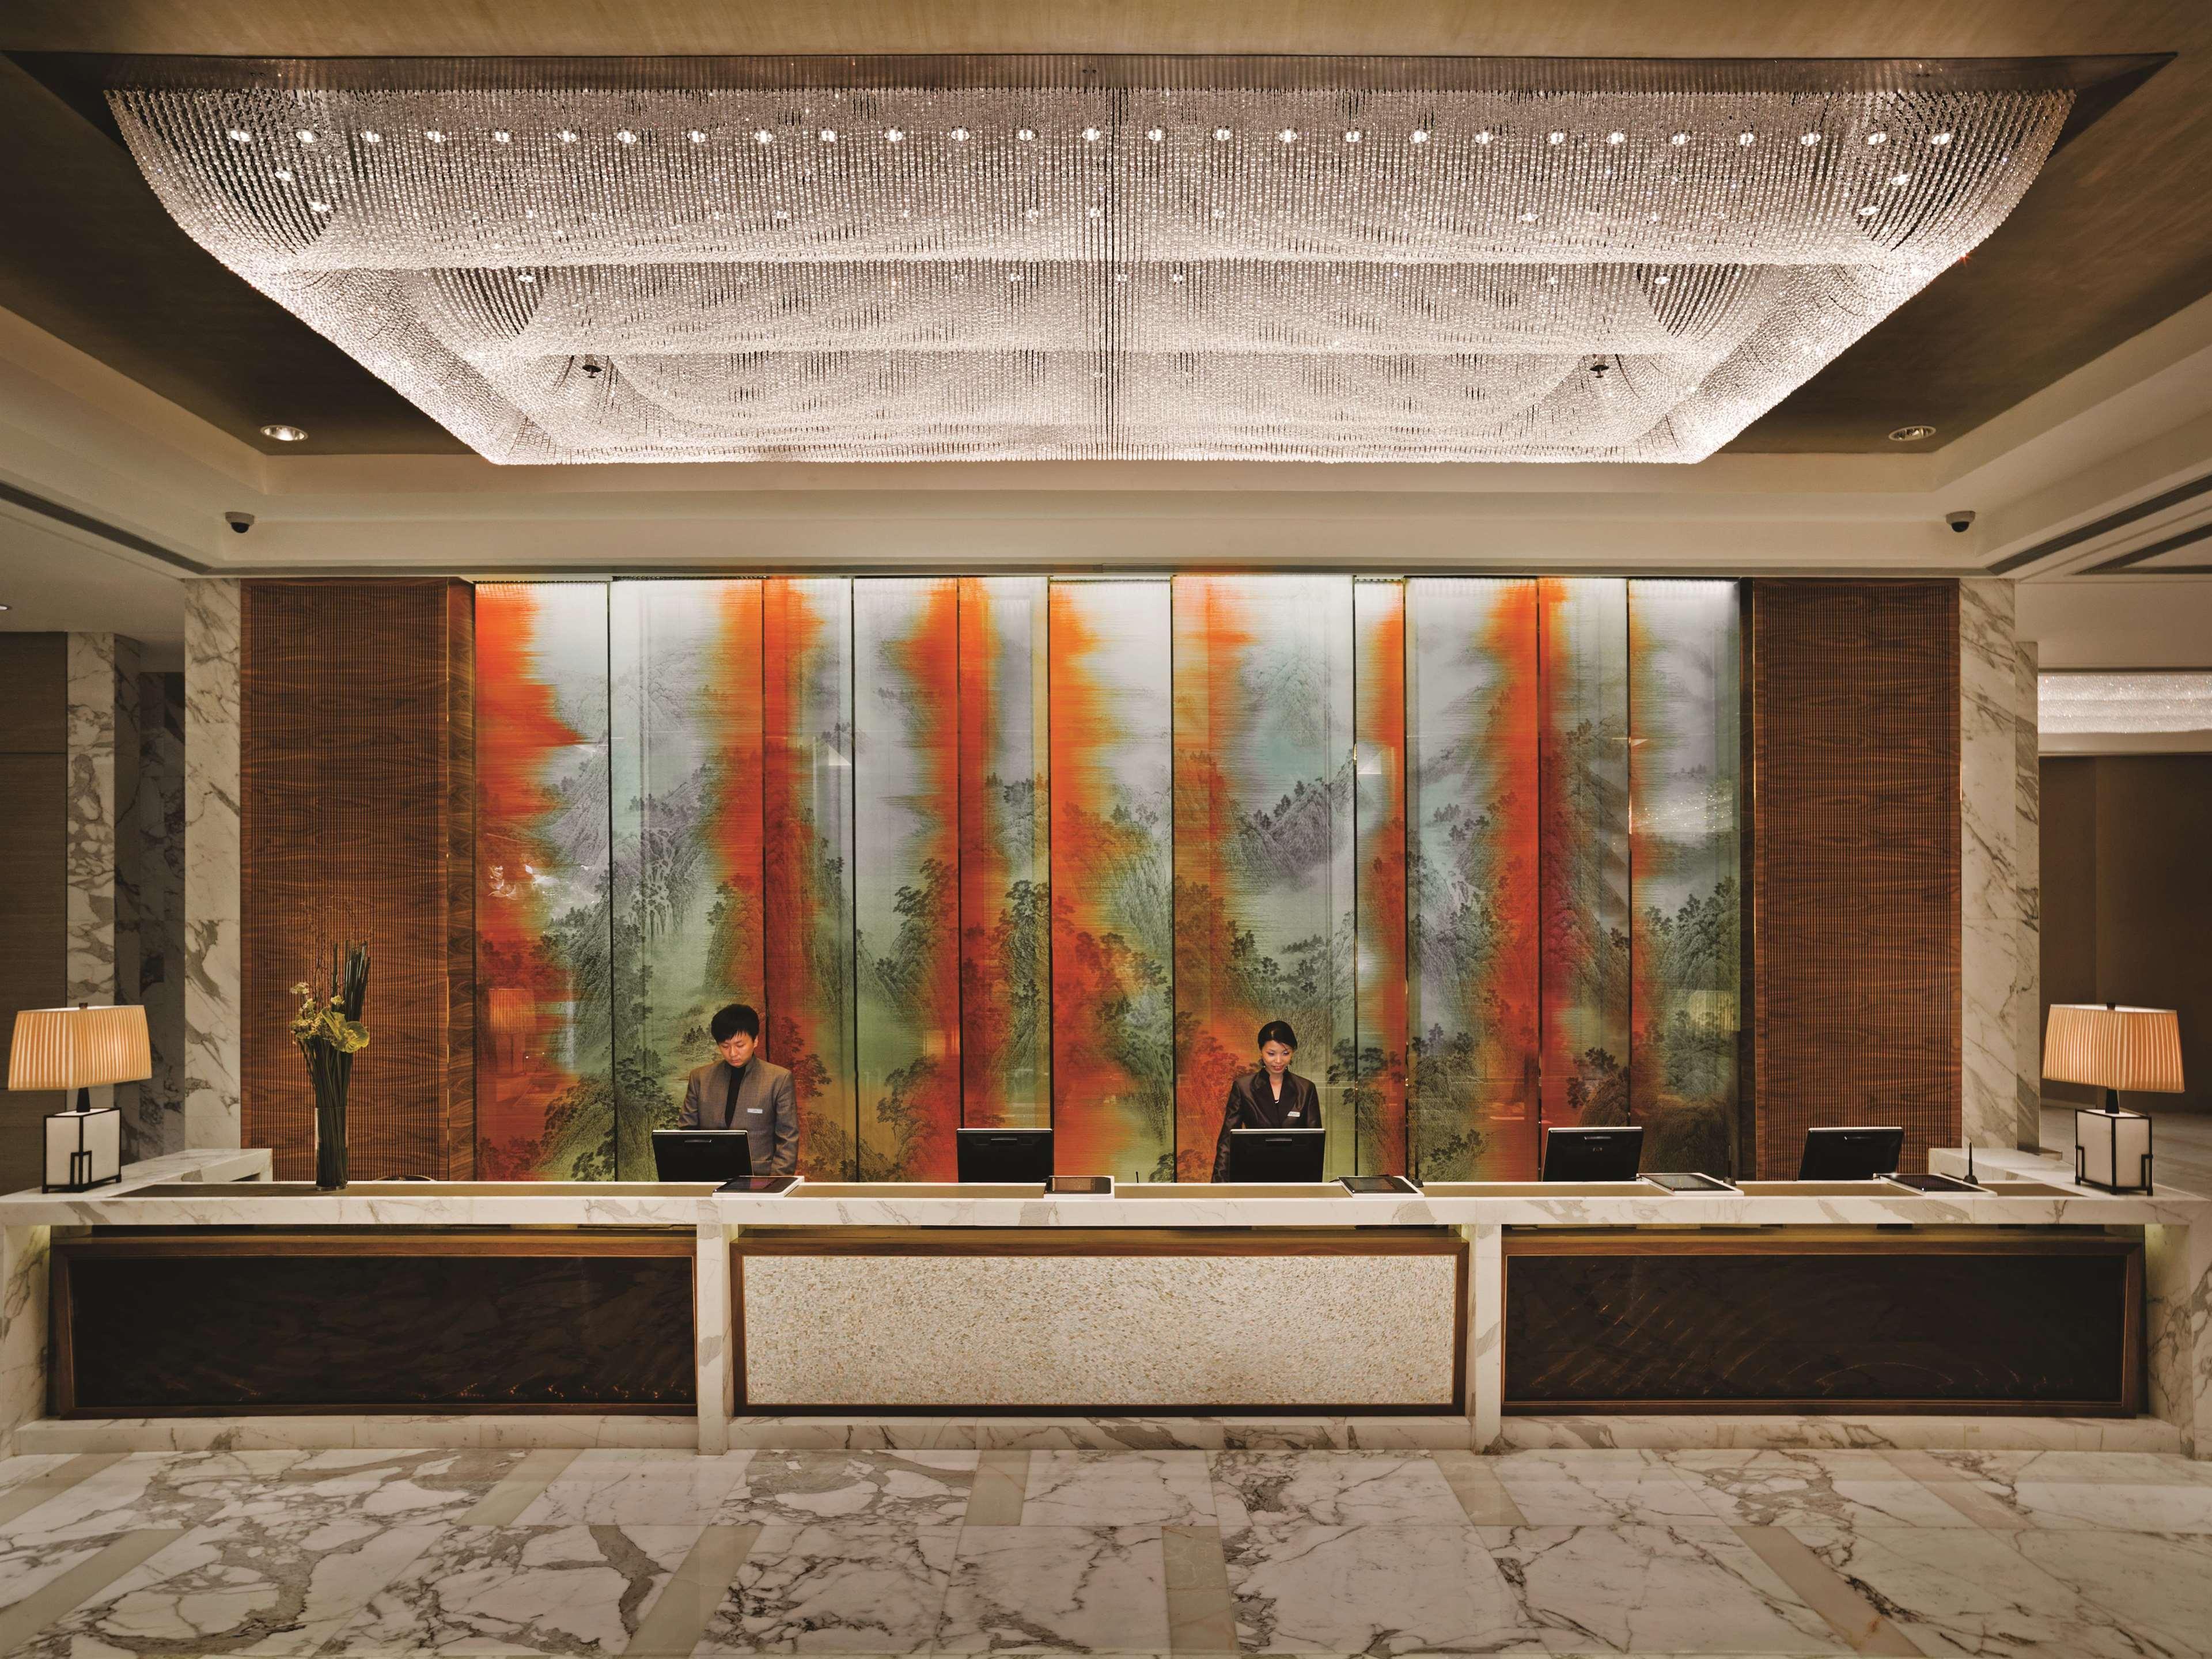 Kerry Hotel, Beijing By Shangri-La Экстерьер фото